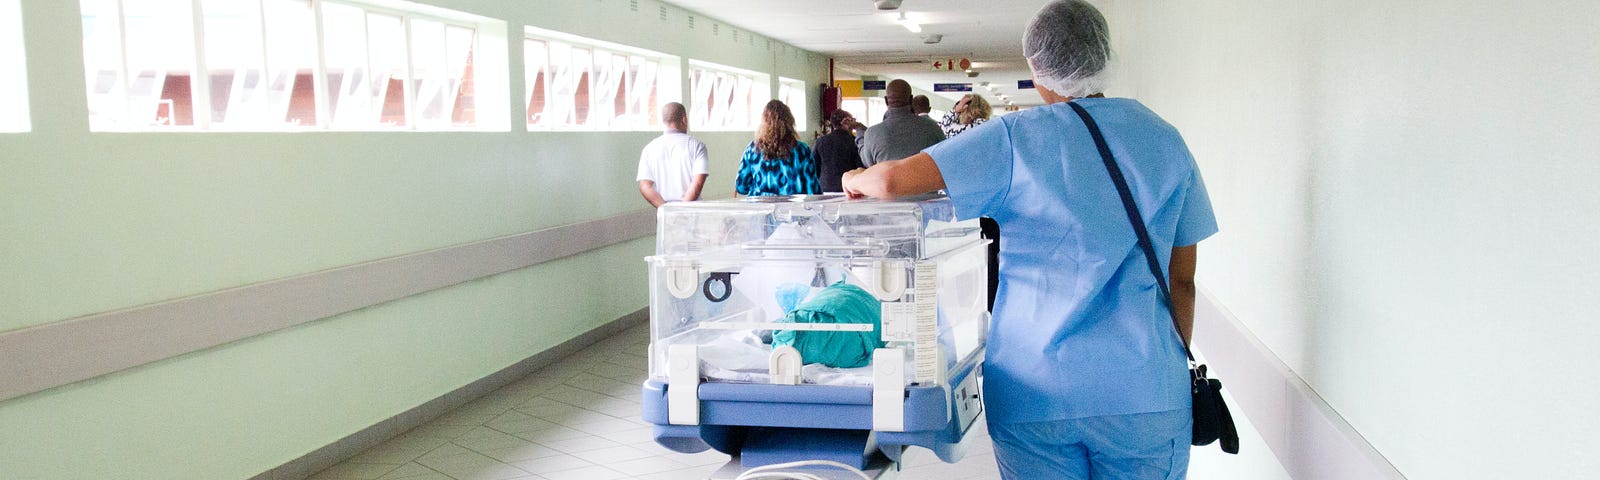 A nurse pushes an incubator in a hospital hallway.